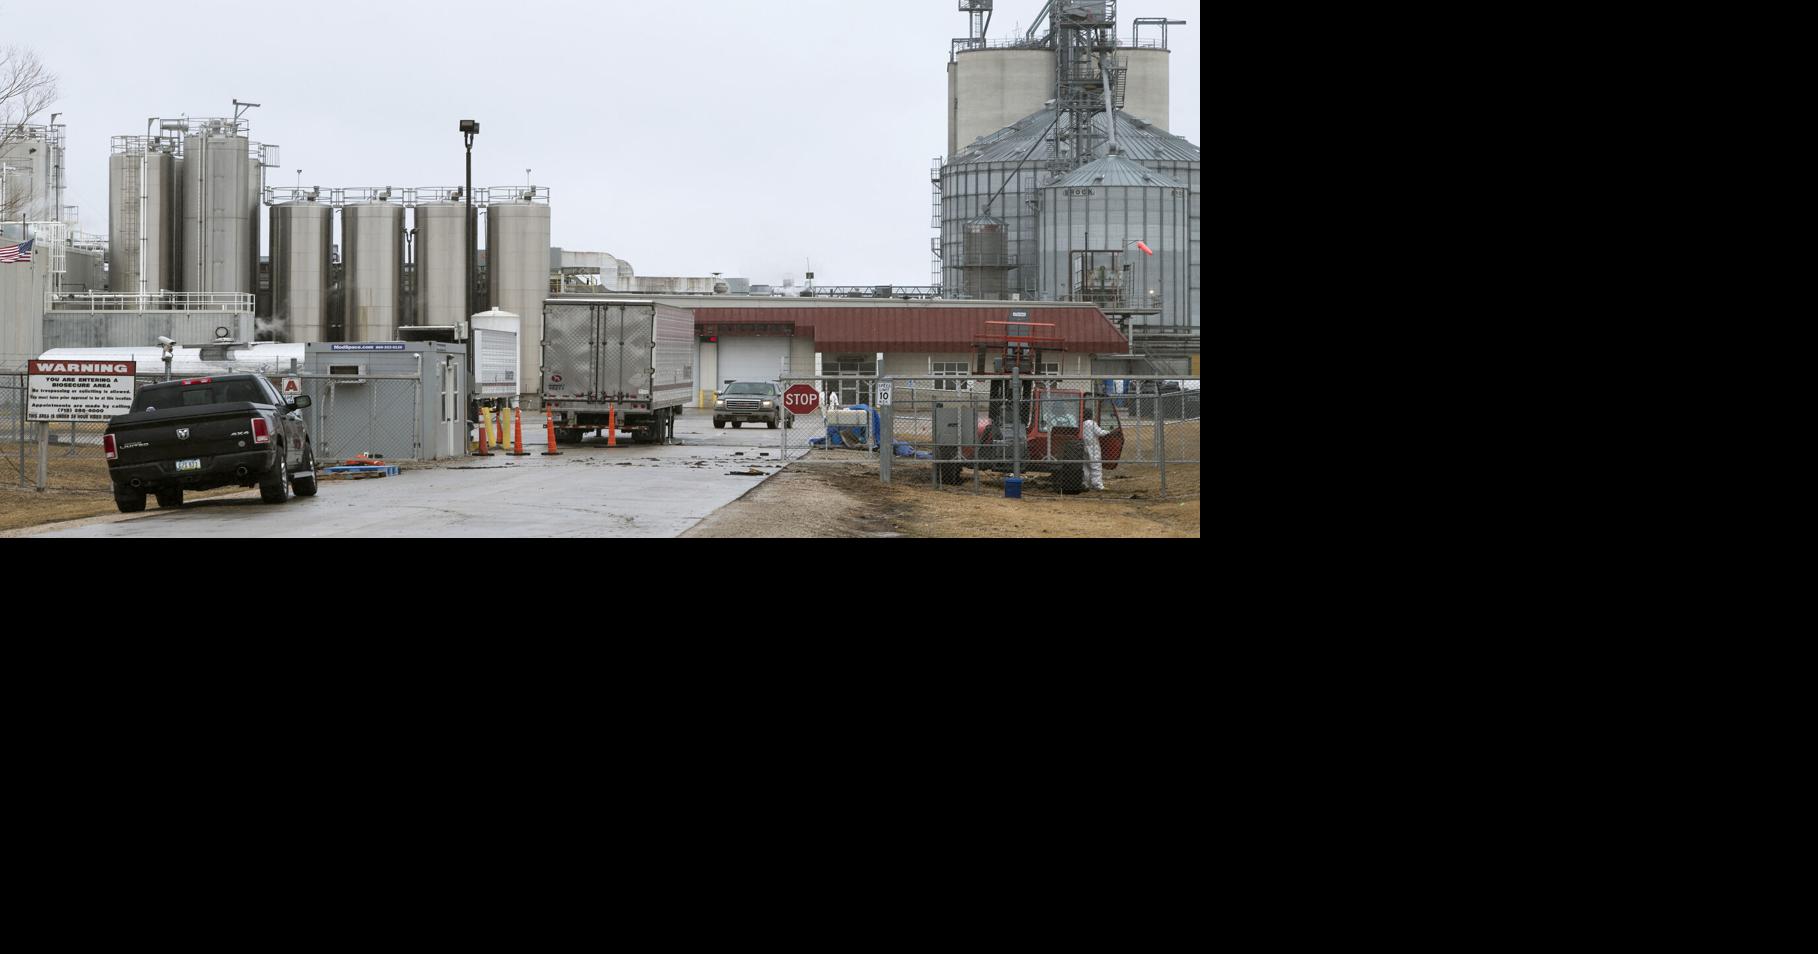 Poultry farmers in Northwest Iowa anxious, watchful as avian influenza  spreads